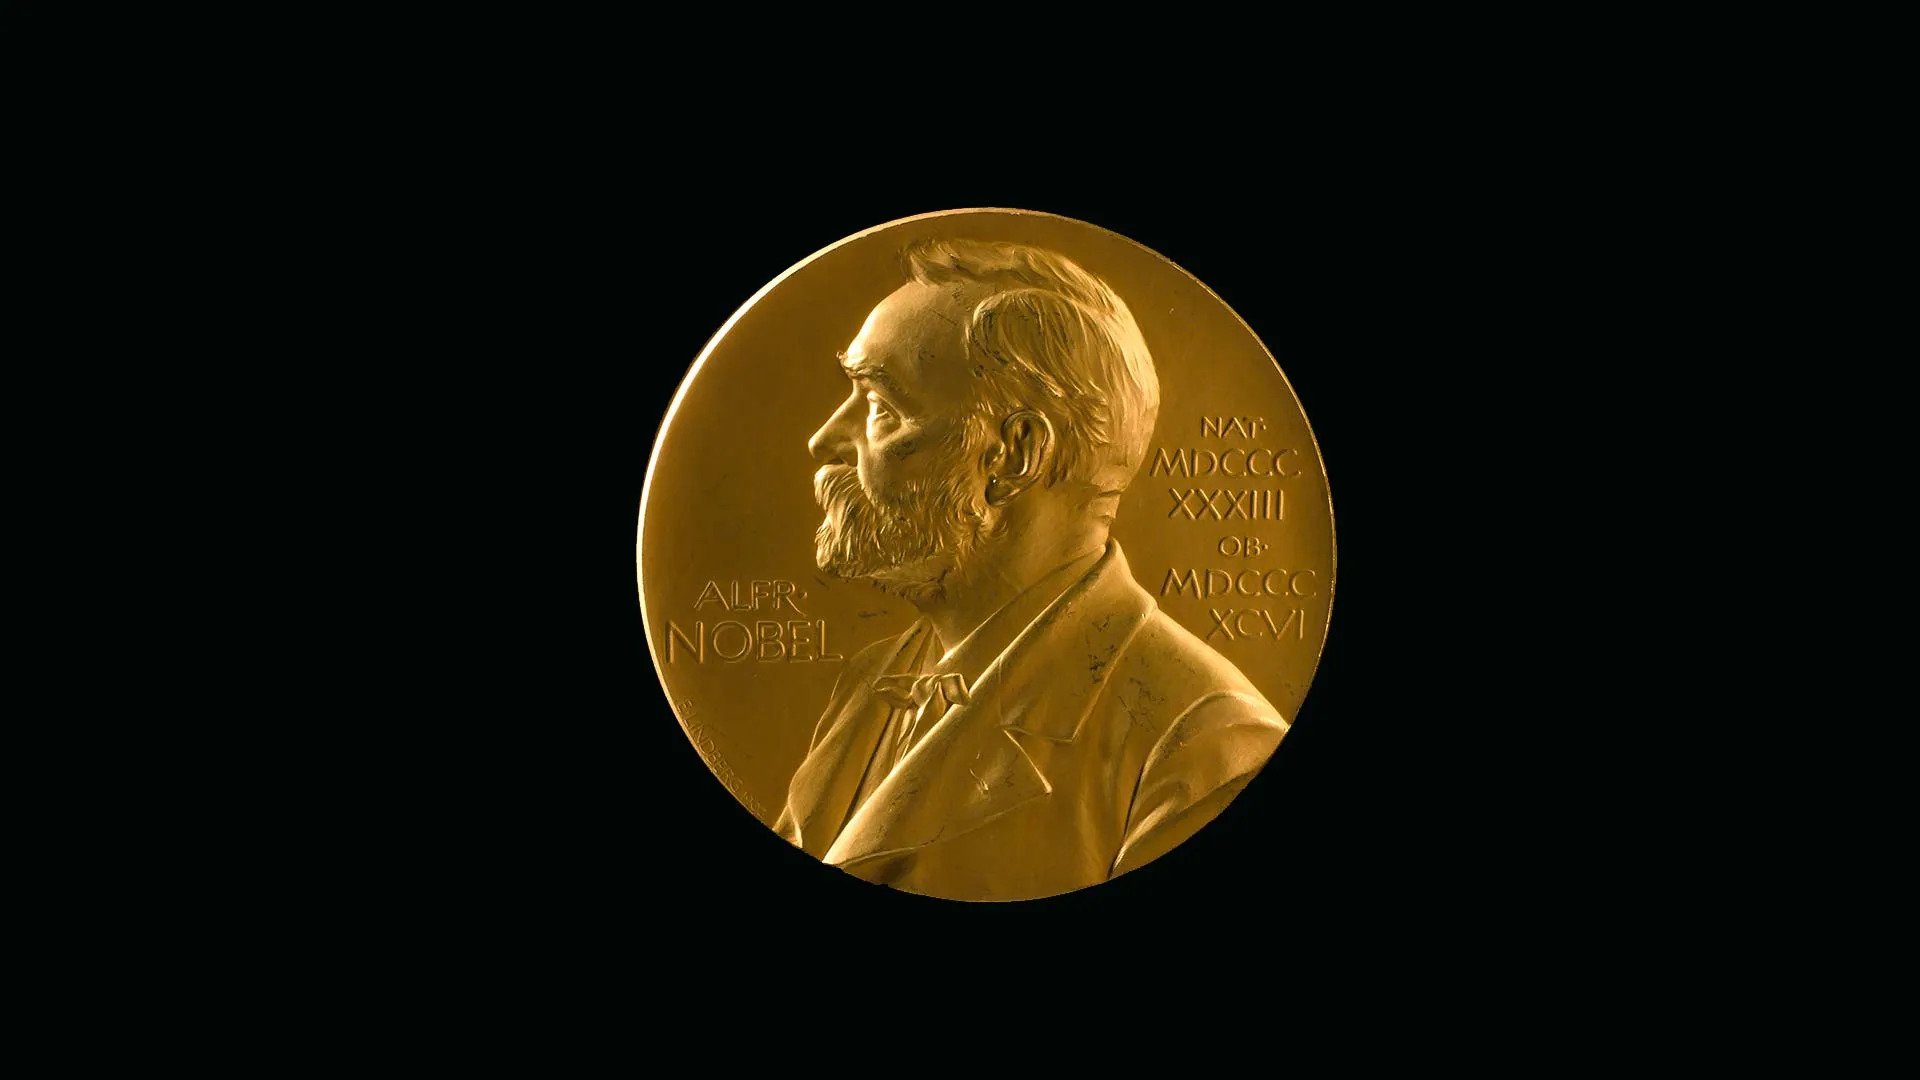 The Nobel prize winner's coin